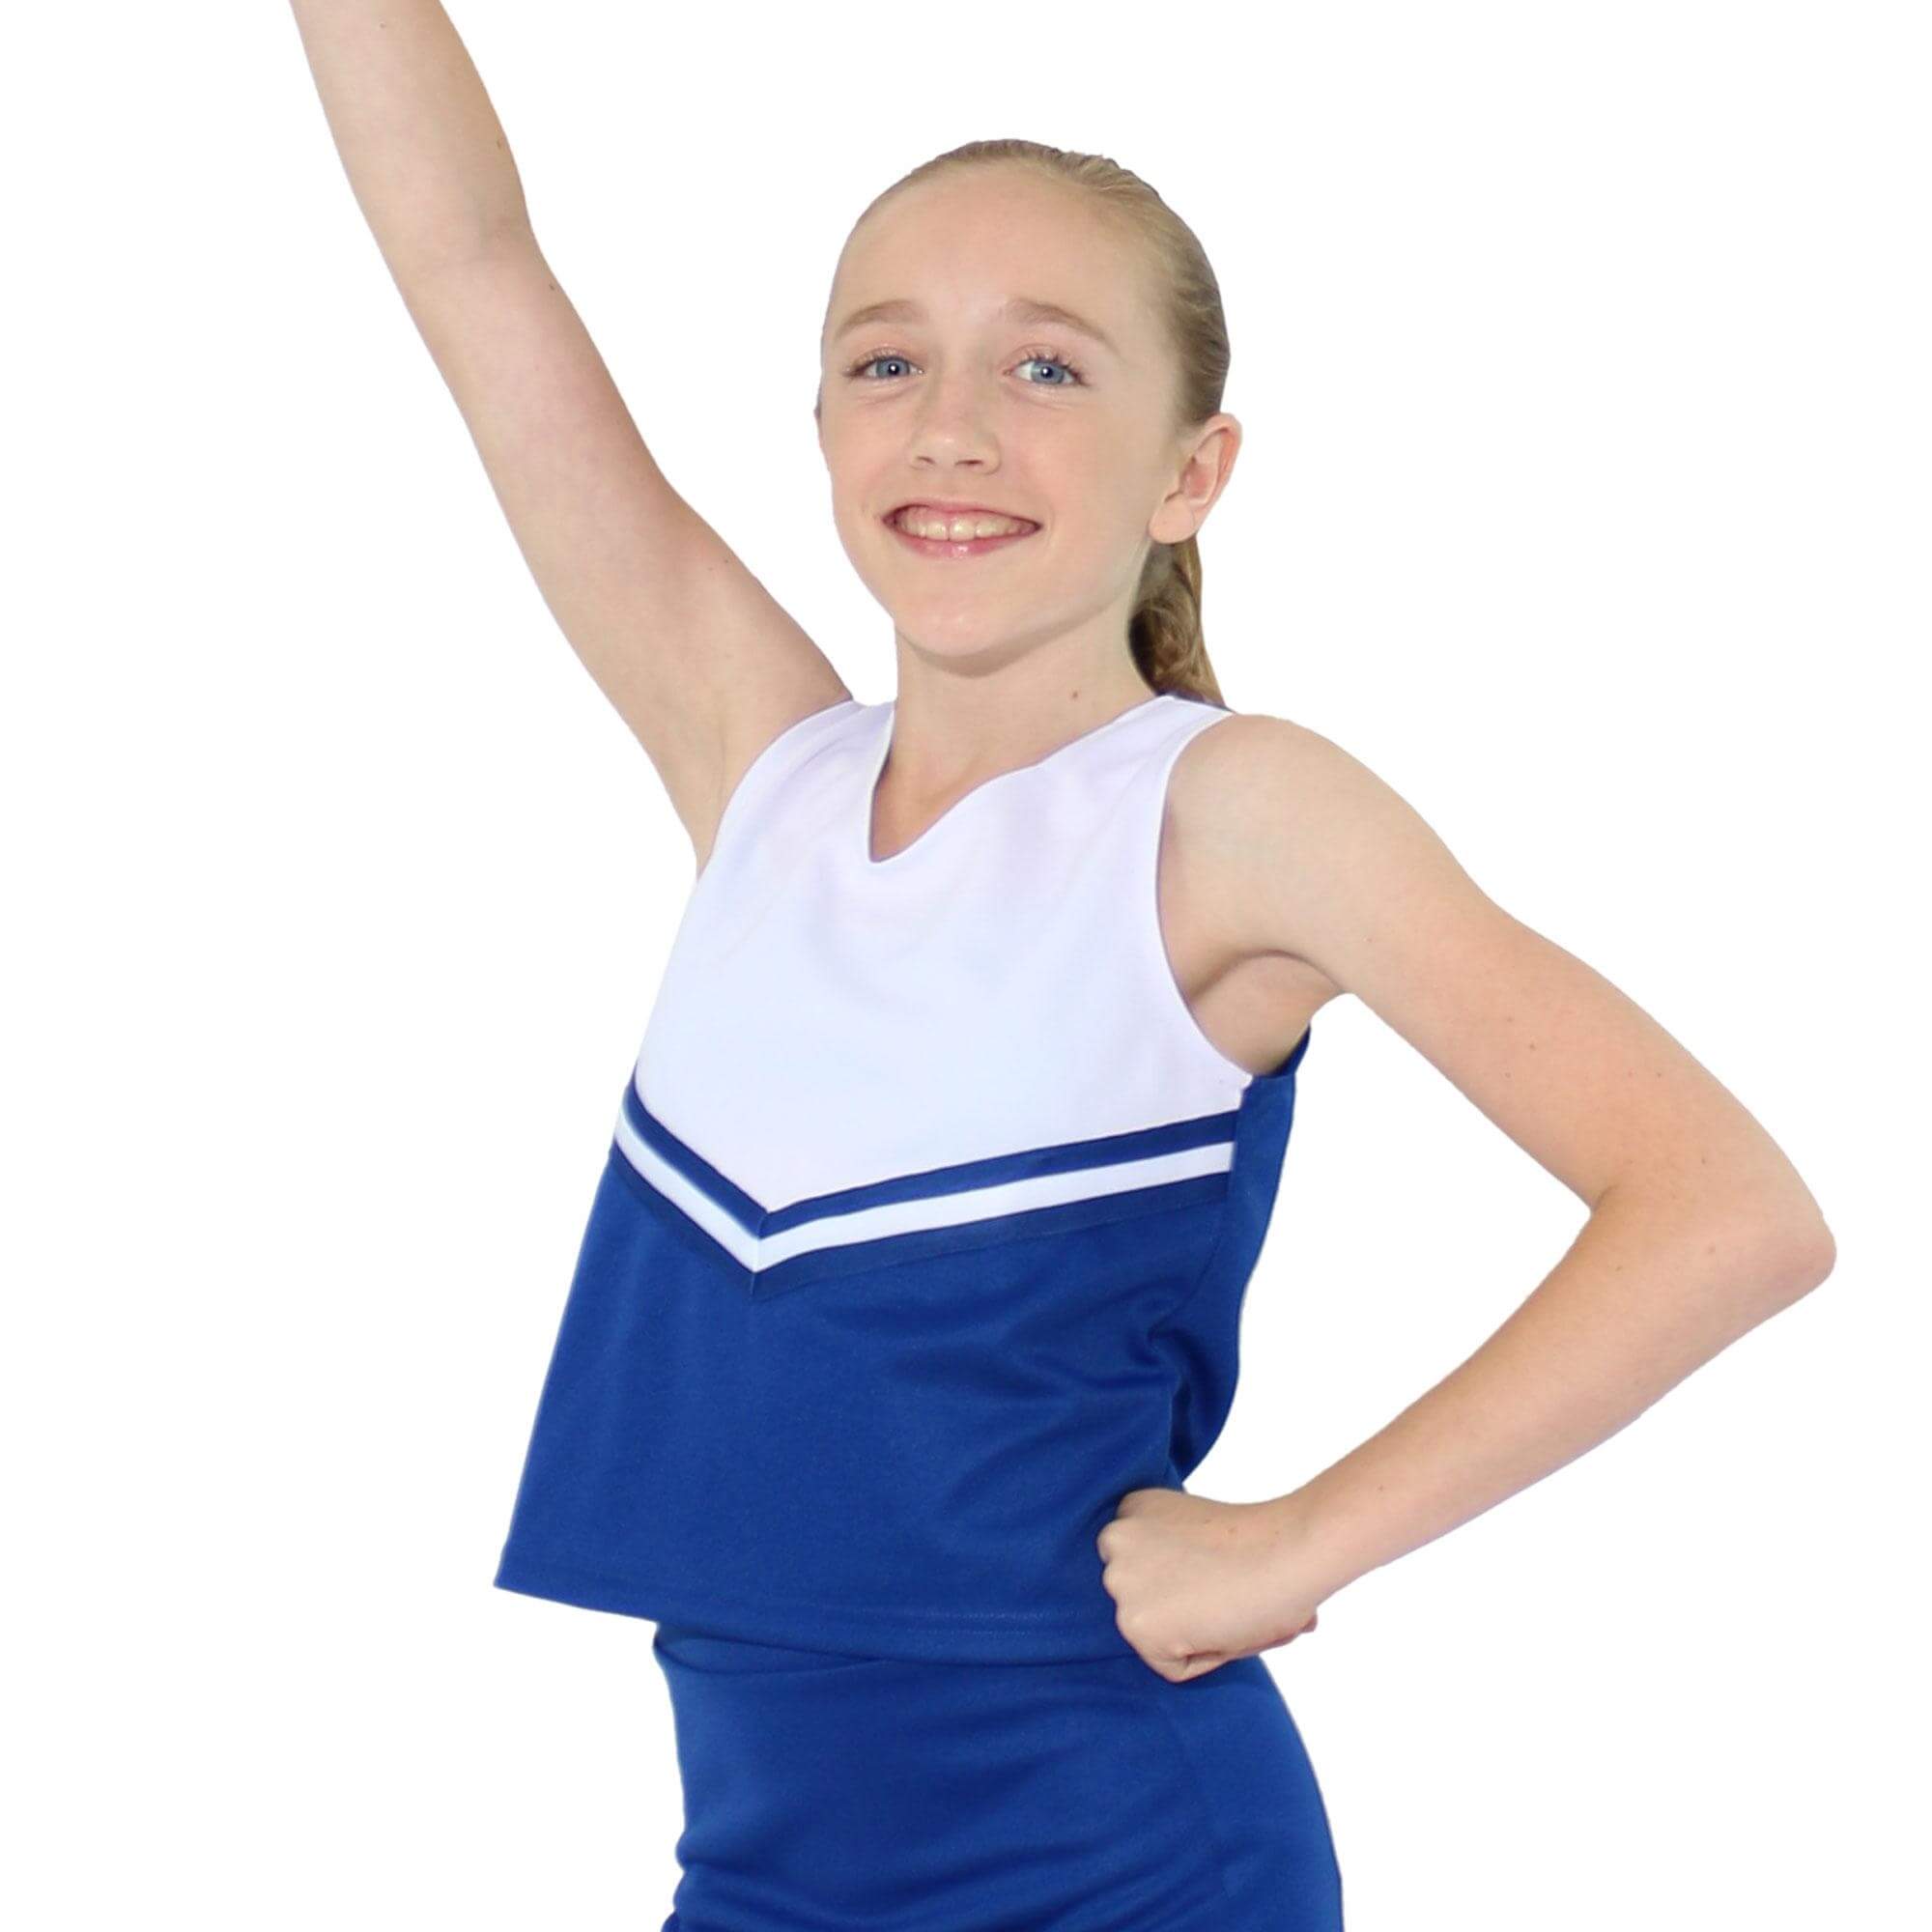 Danzcue Girls Classic Cheerleaders Uniform Shell Top 